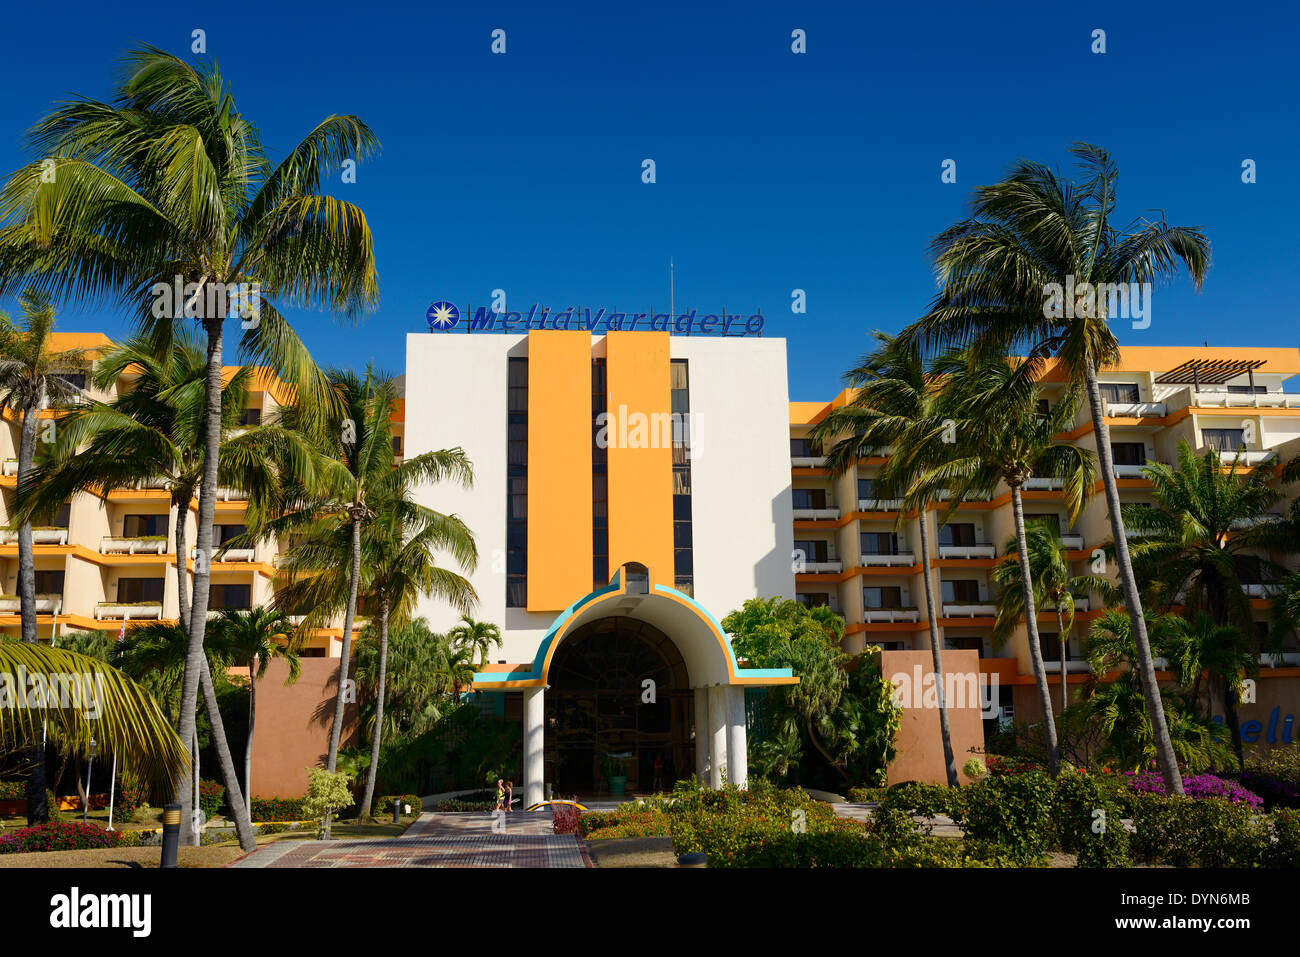 Entrée principale de l'Hôtel Melia Varadero all inclusive beach resort sur la péninsule de Hicacos et la baie de Cardenas Cuba océan Atlantique avec ciel bleu Banque D'Images